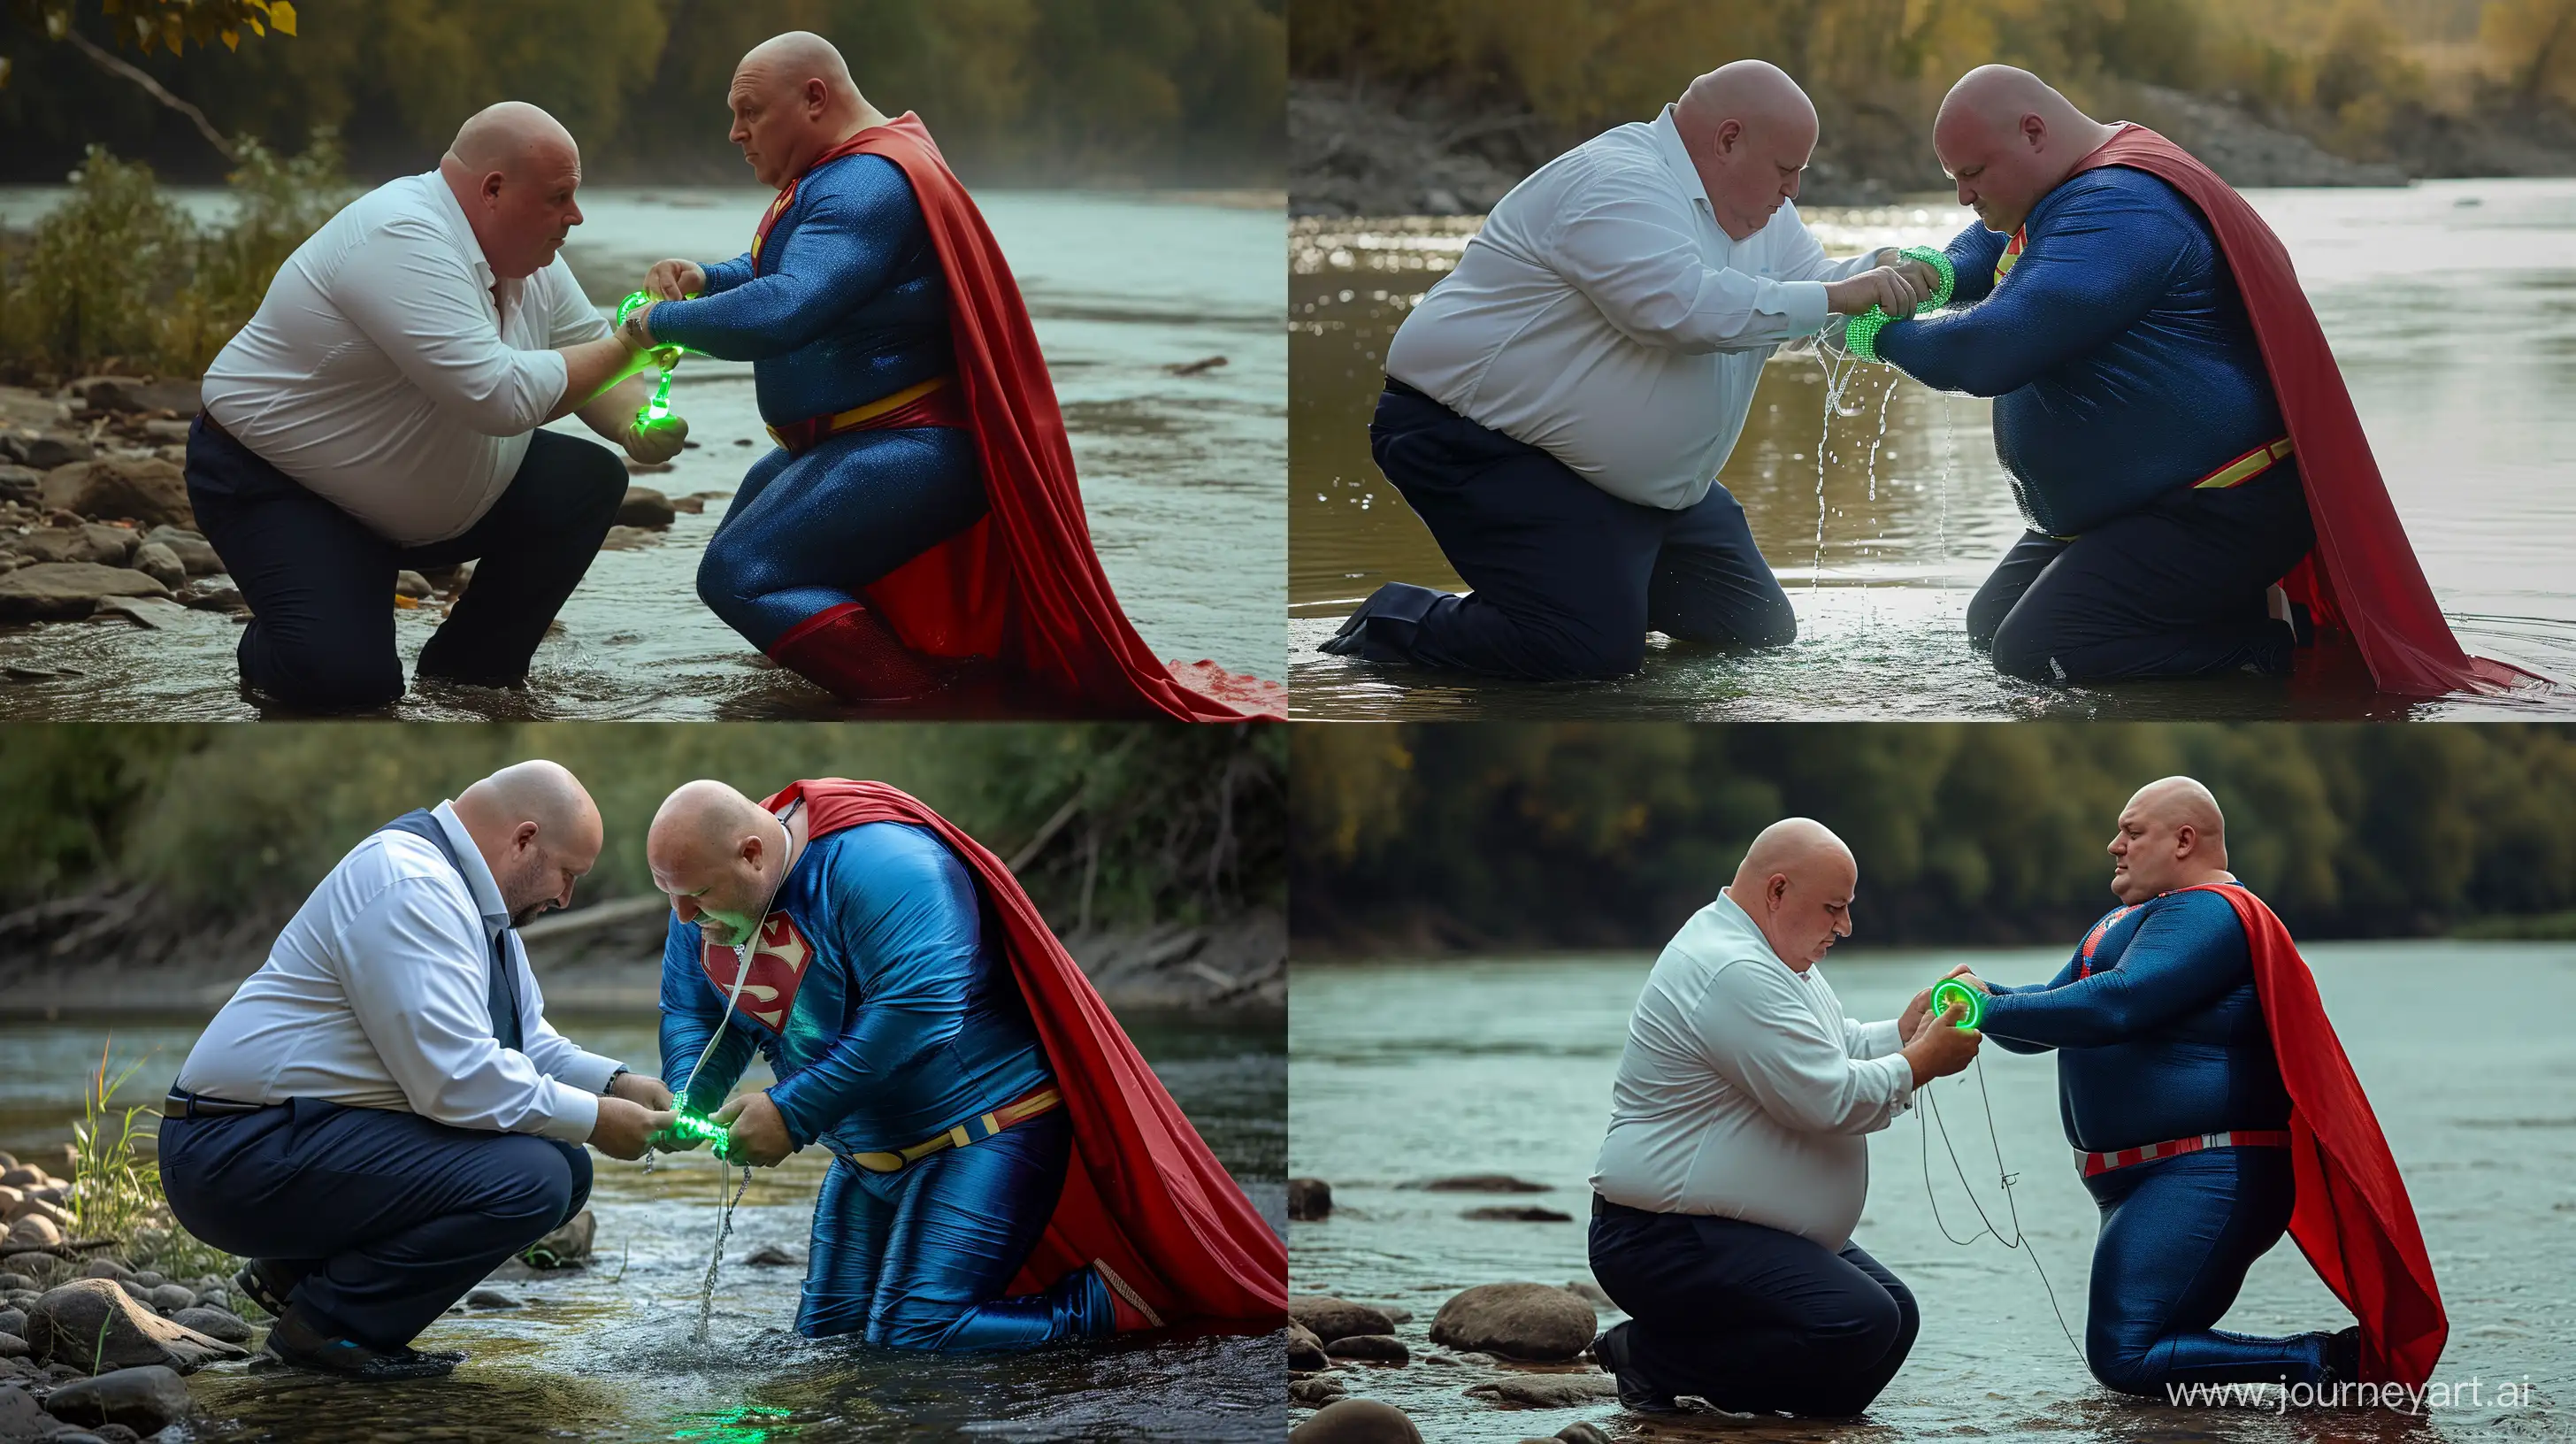 Elderly-Friends-Bonding-Chubby-Men-in-Playful-Superhero-Moment-by-the-River